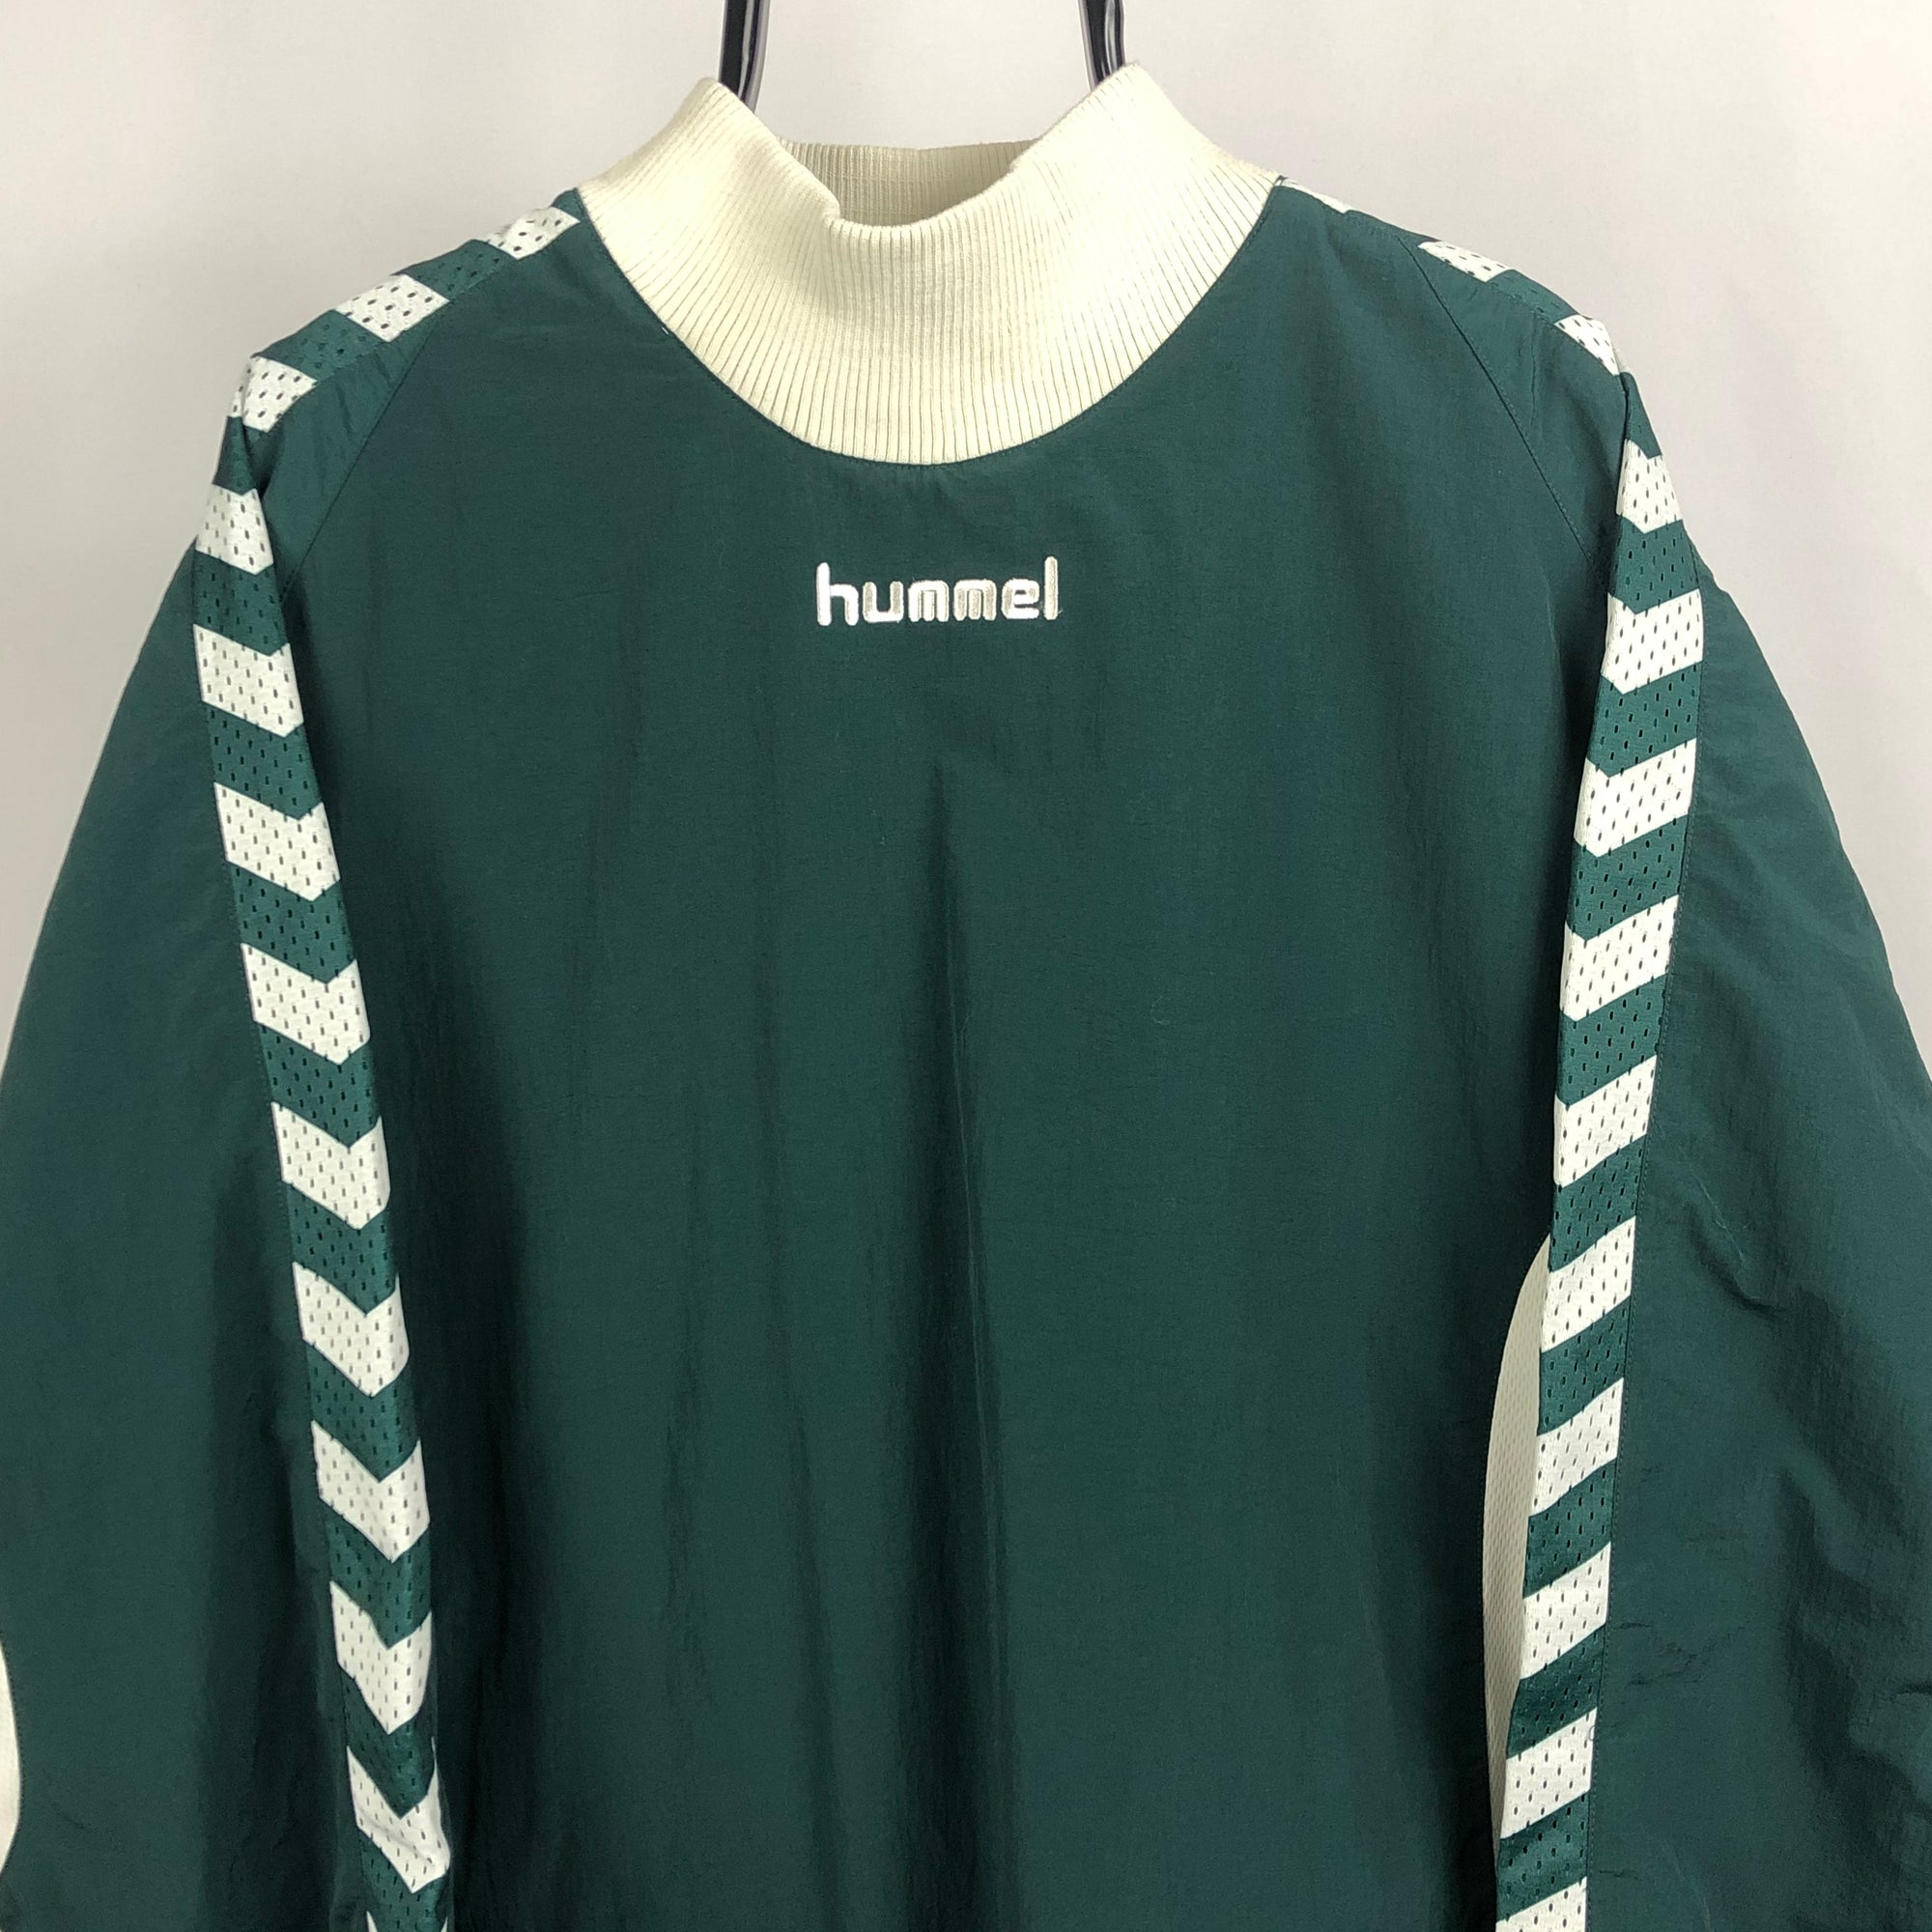 Hummel Nylon Sweatshirt/Training Top in Green/Cream - Men's XL/Women's XXL